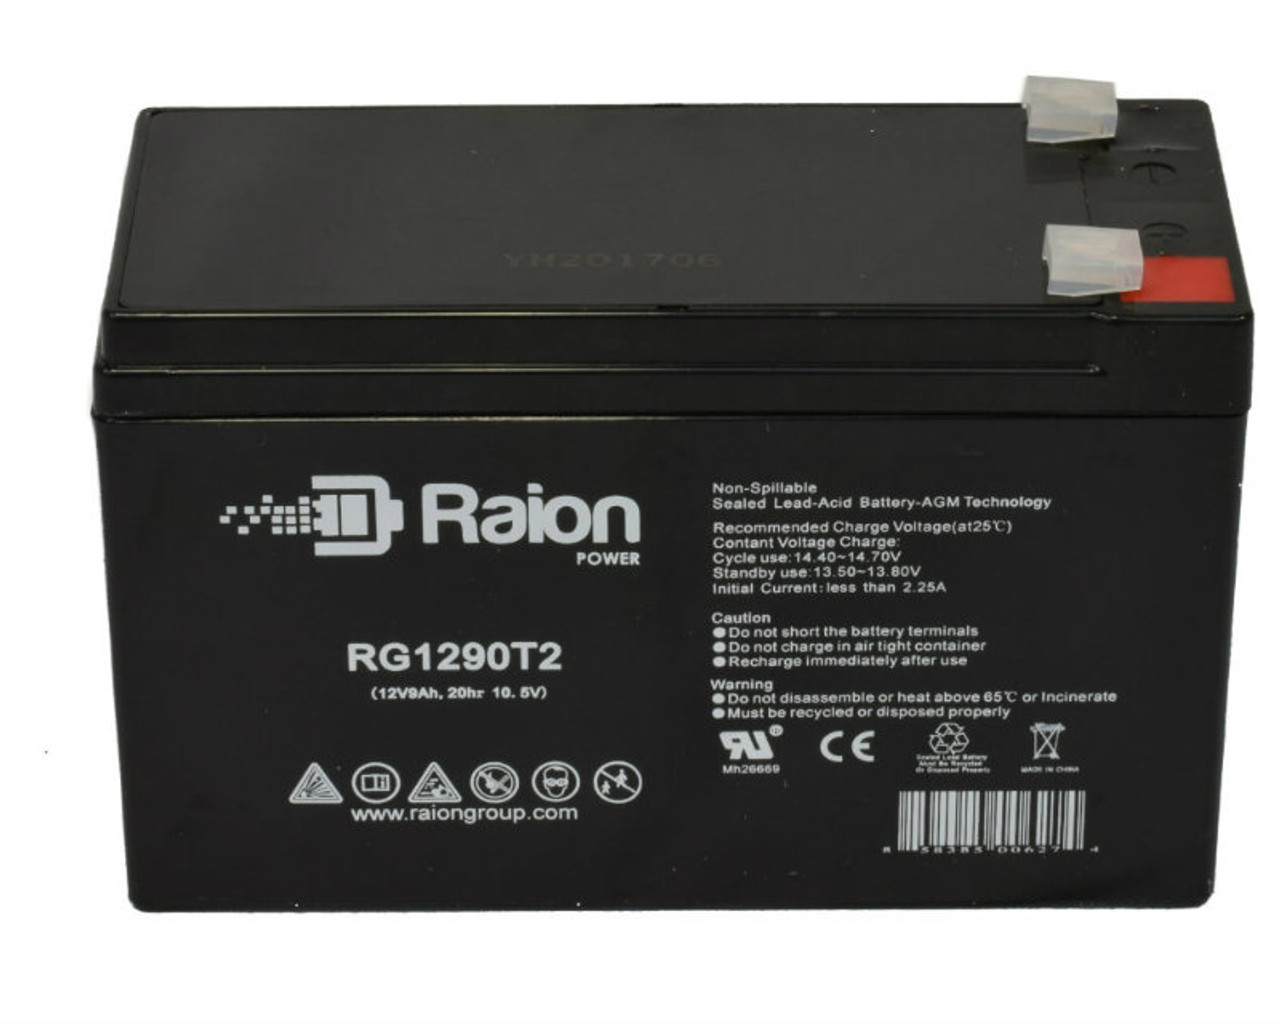 Raion Power RG1290T2 12V 9Ah Lead Acid Battery for X-treme XB-400